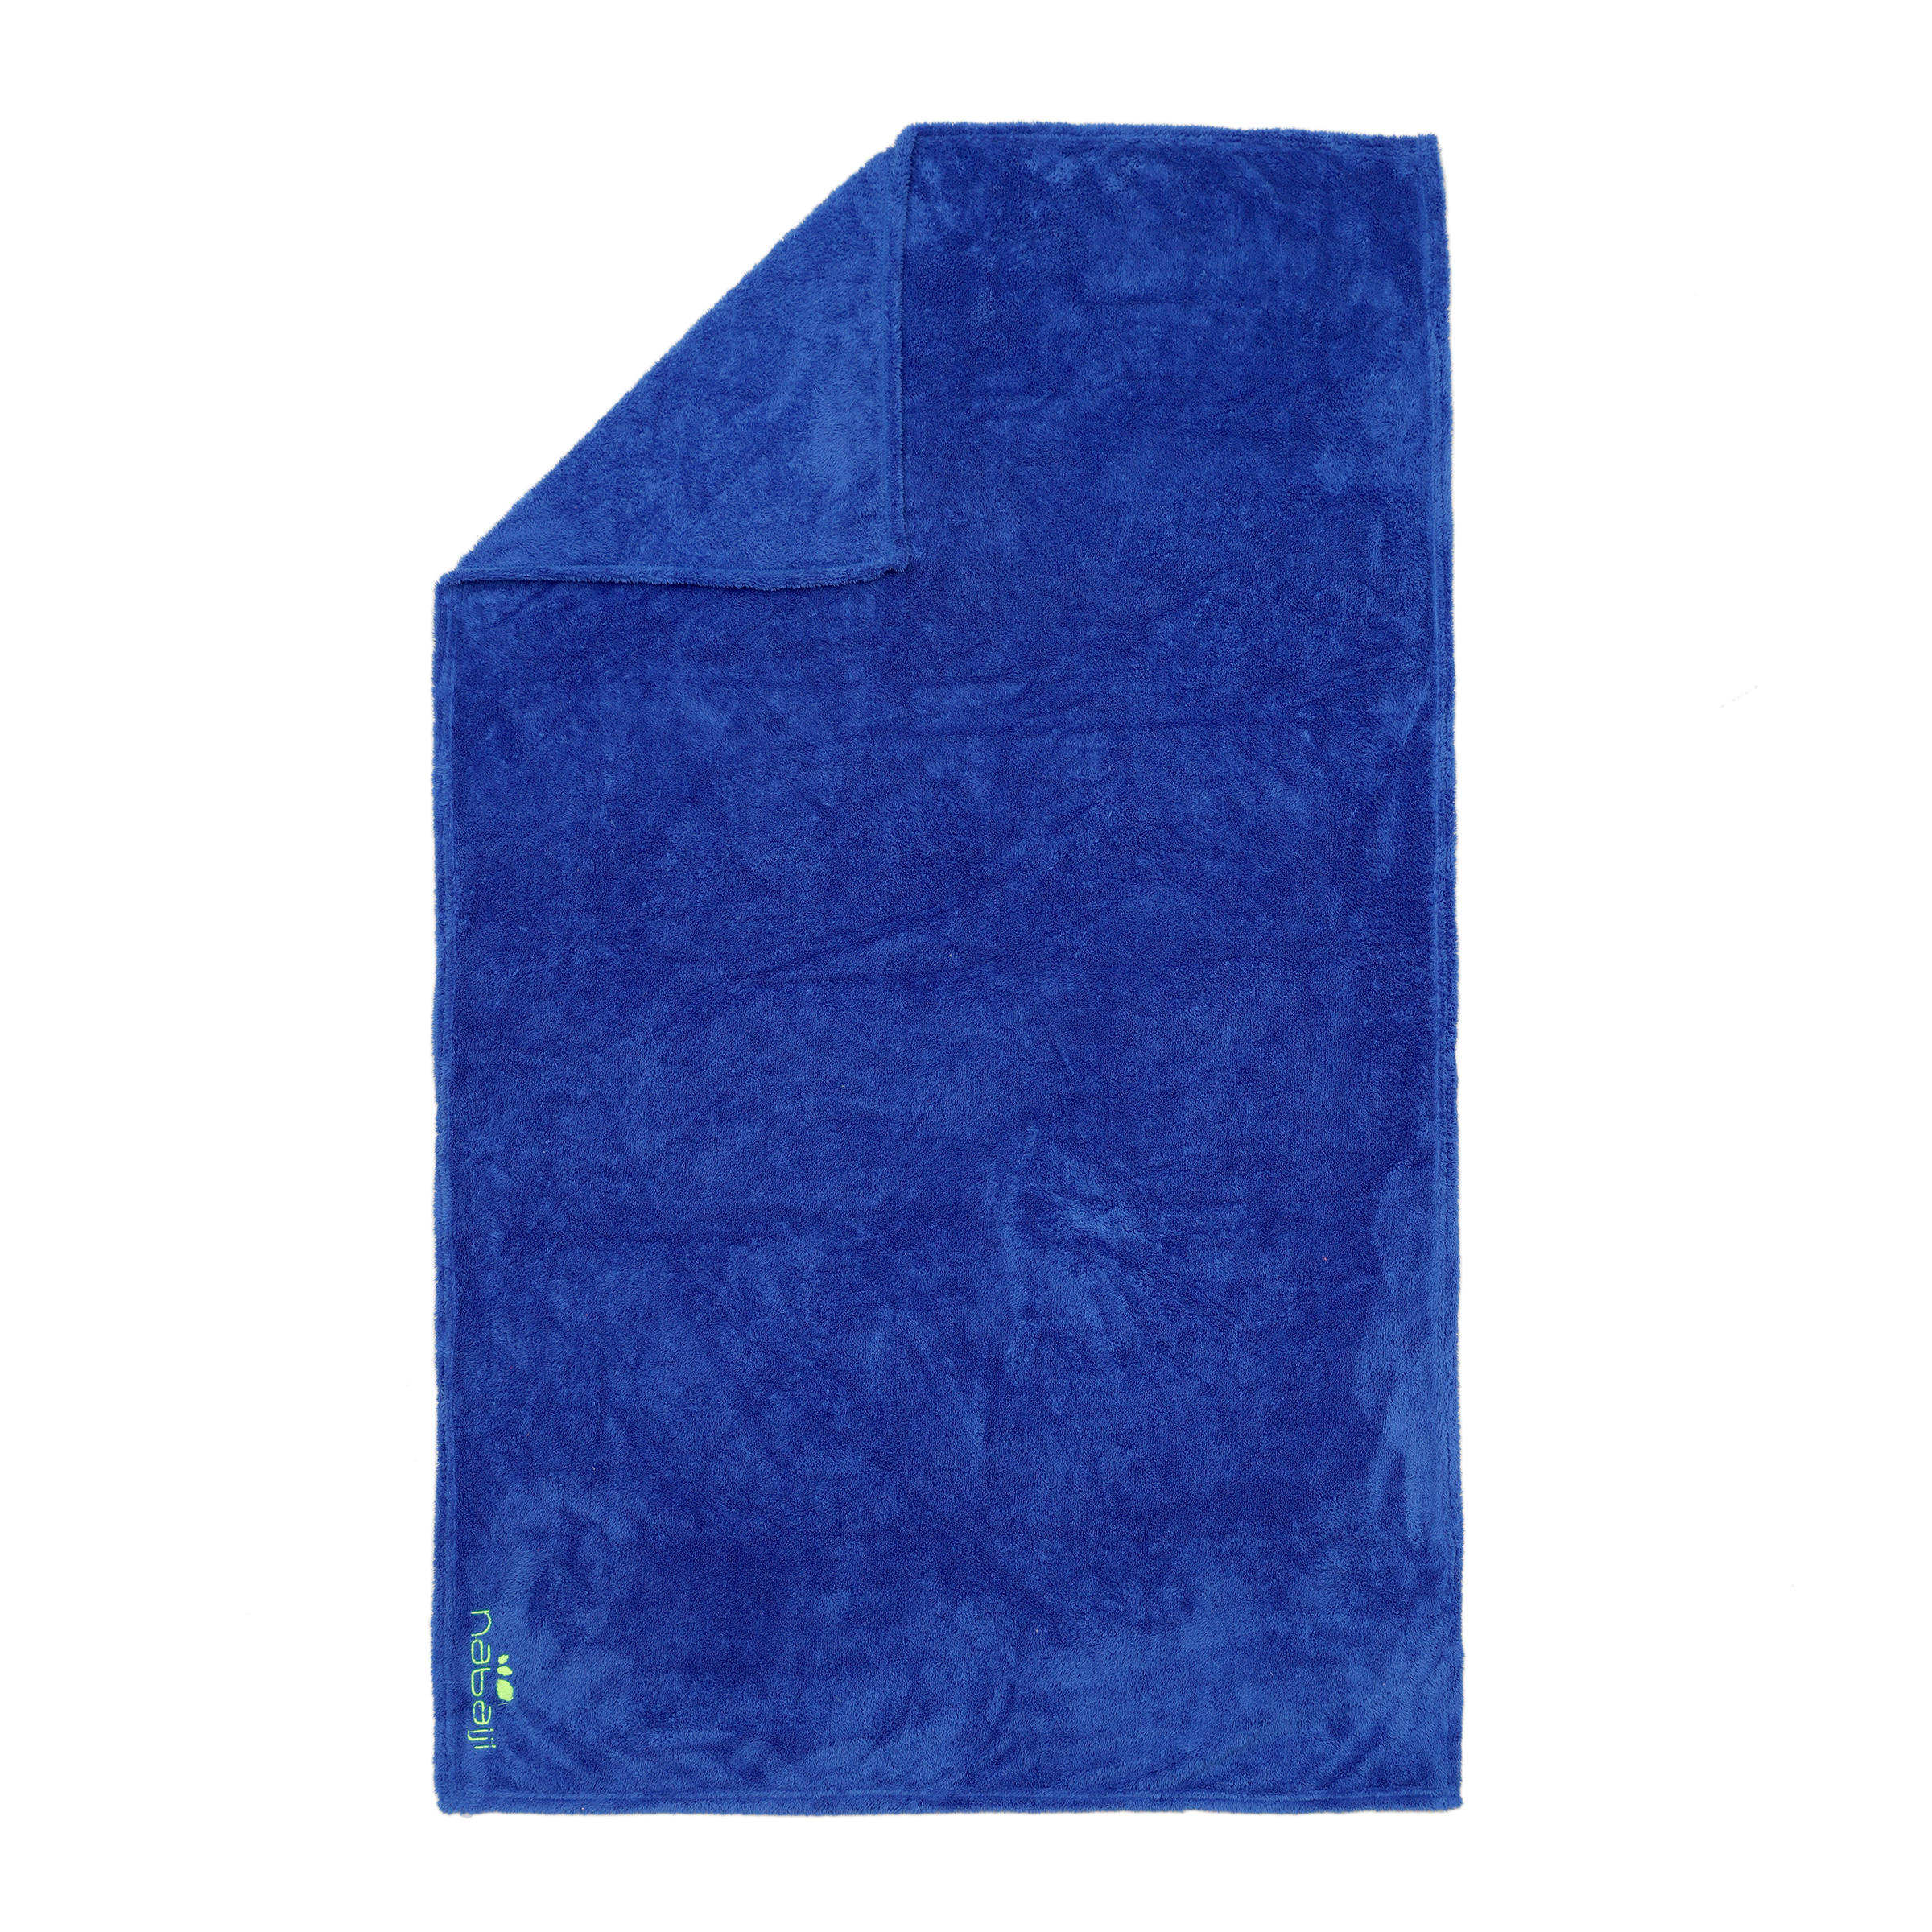 NABAIJI Soft Microfibre Towel, XL Blue